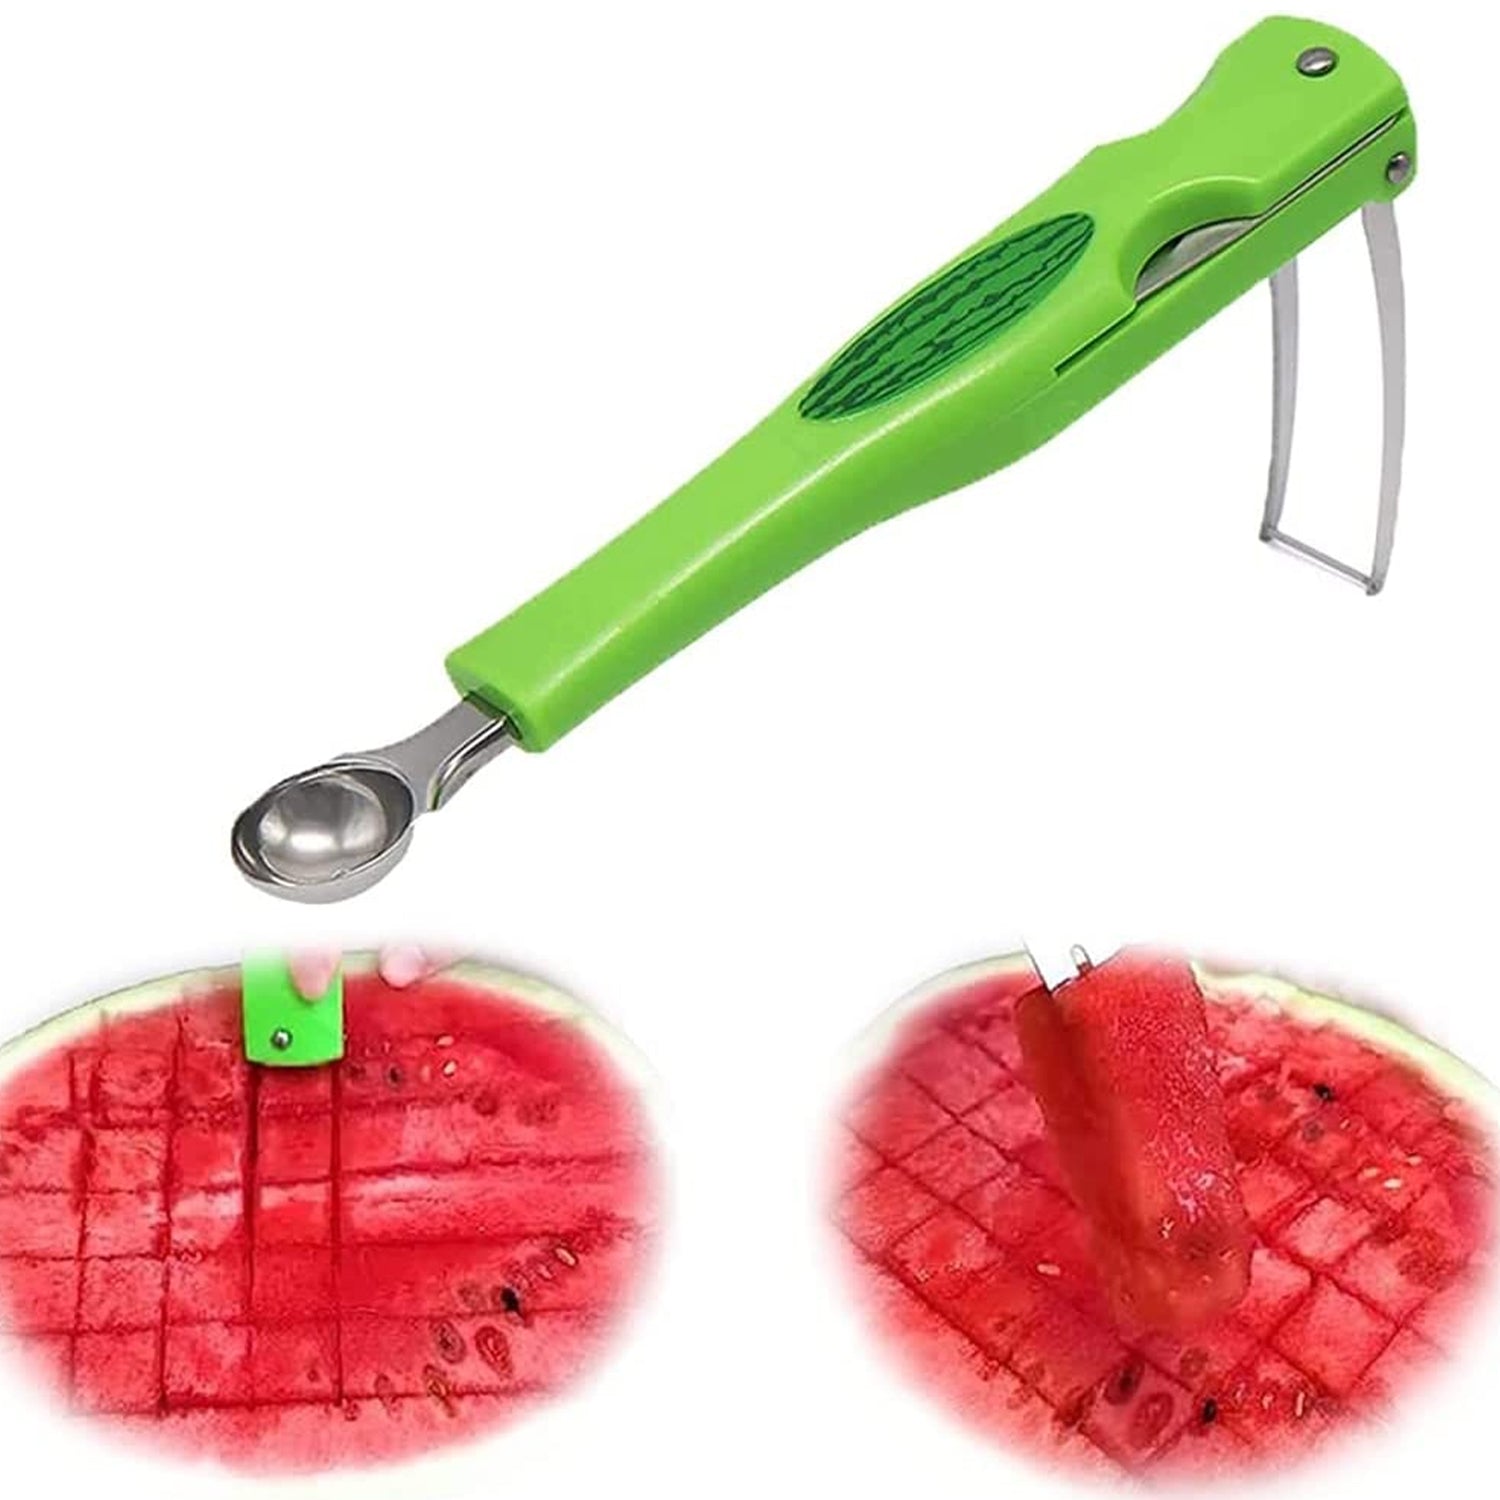 2814 Stainless Steel Fruit Scooper Seed Remover Melon Baller Carving Knife Double Sided Melon Baller for Watermelon Ice Cream. JK Trends